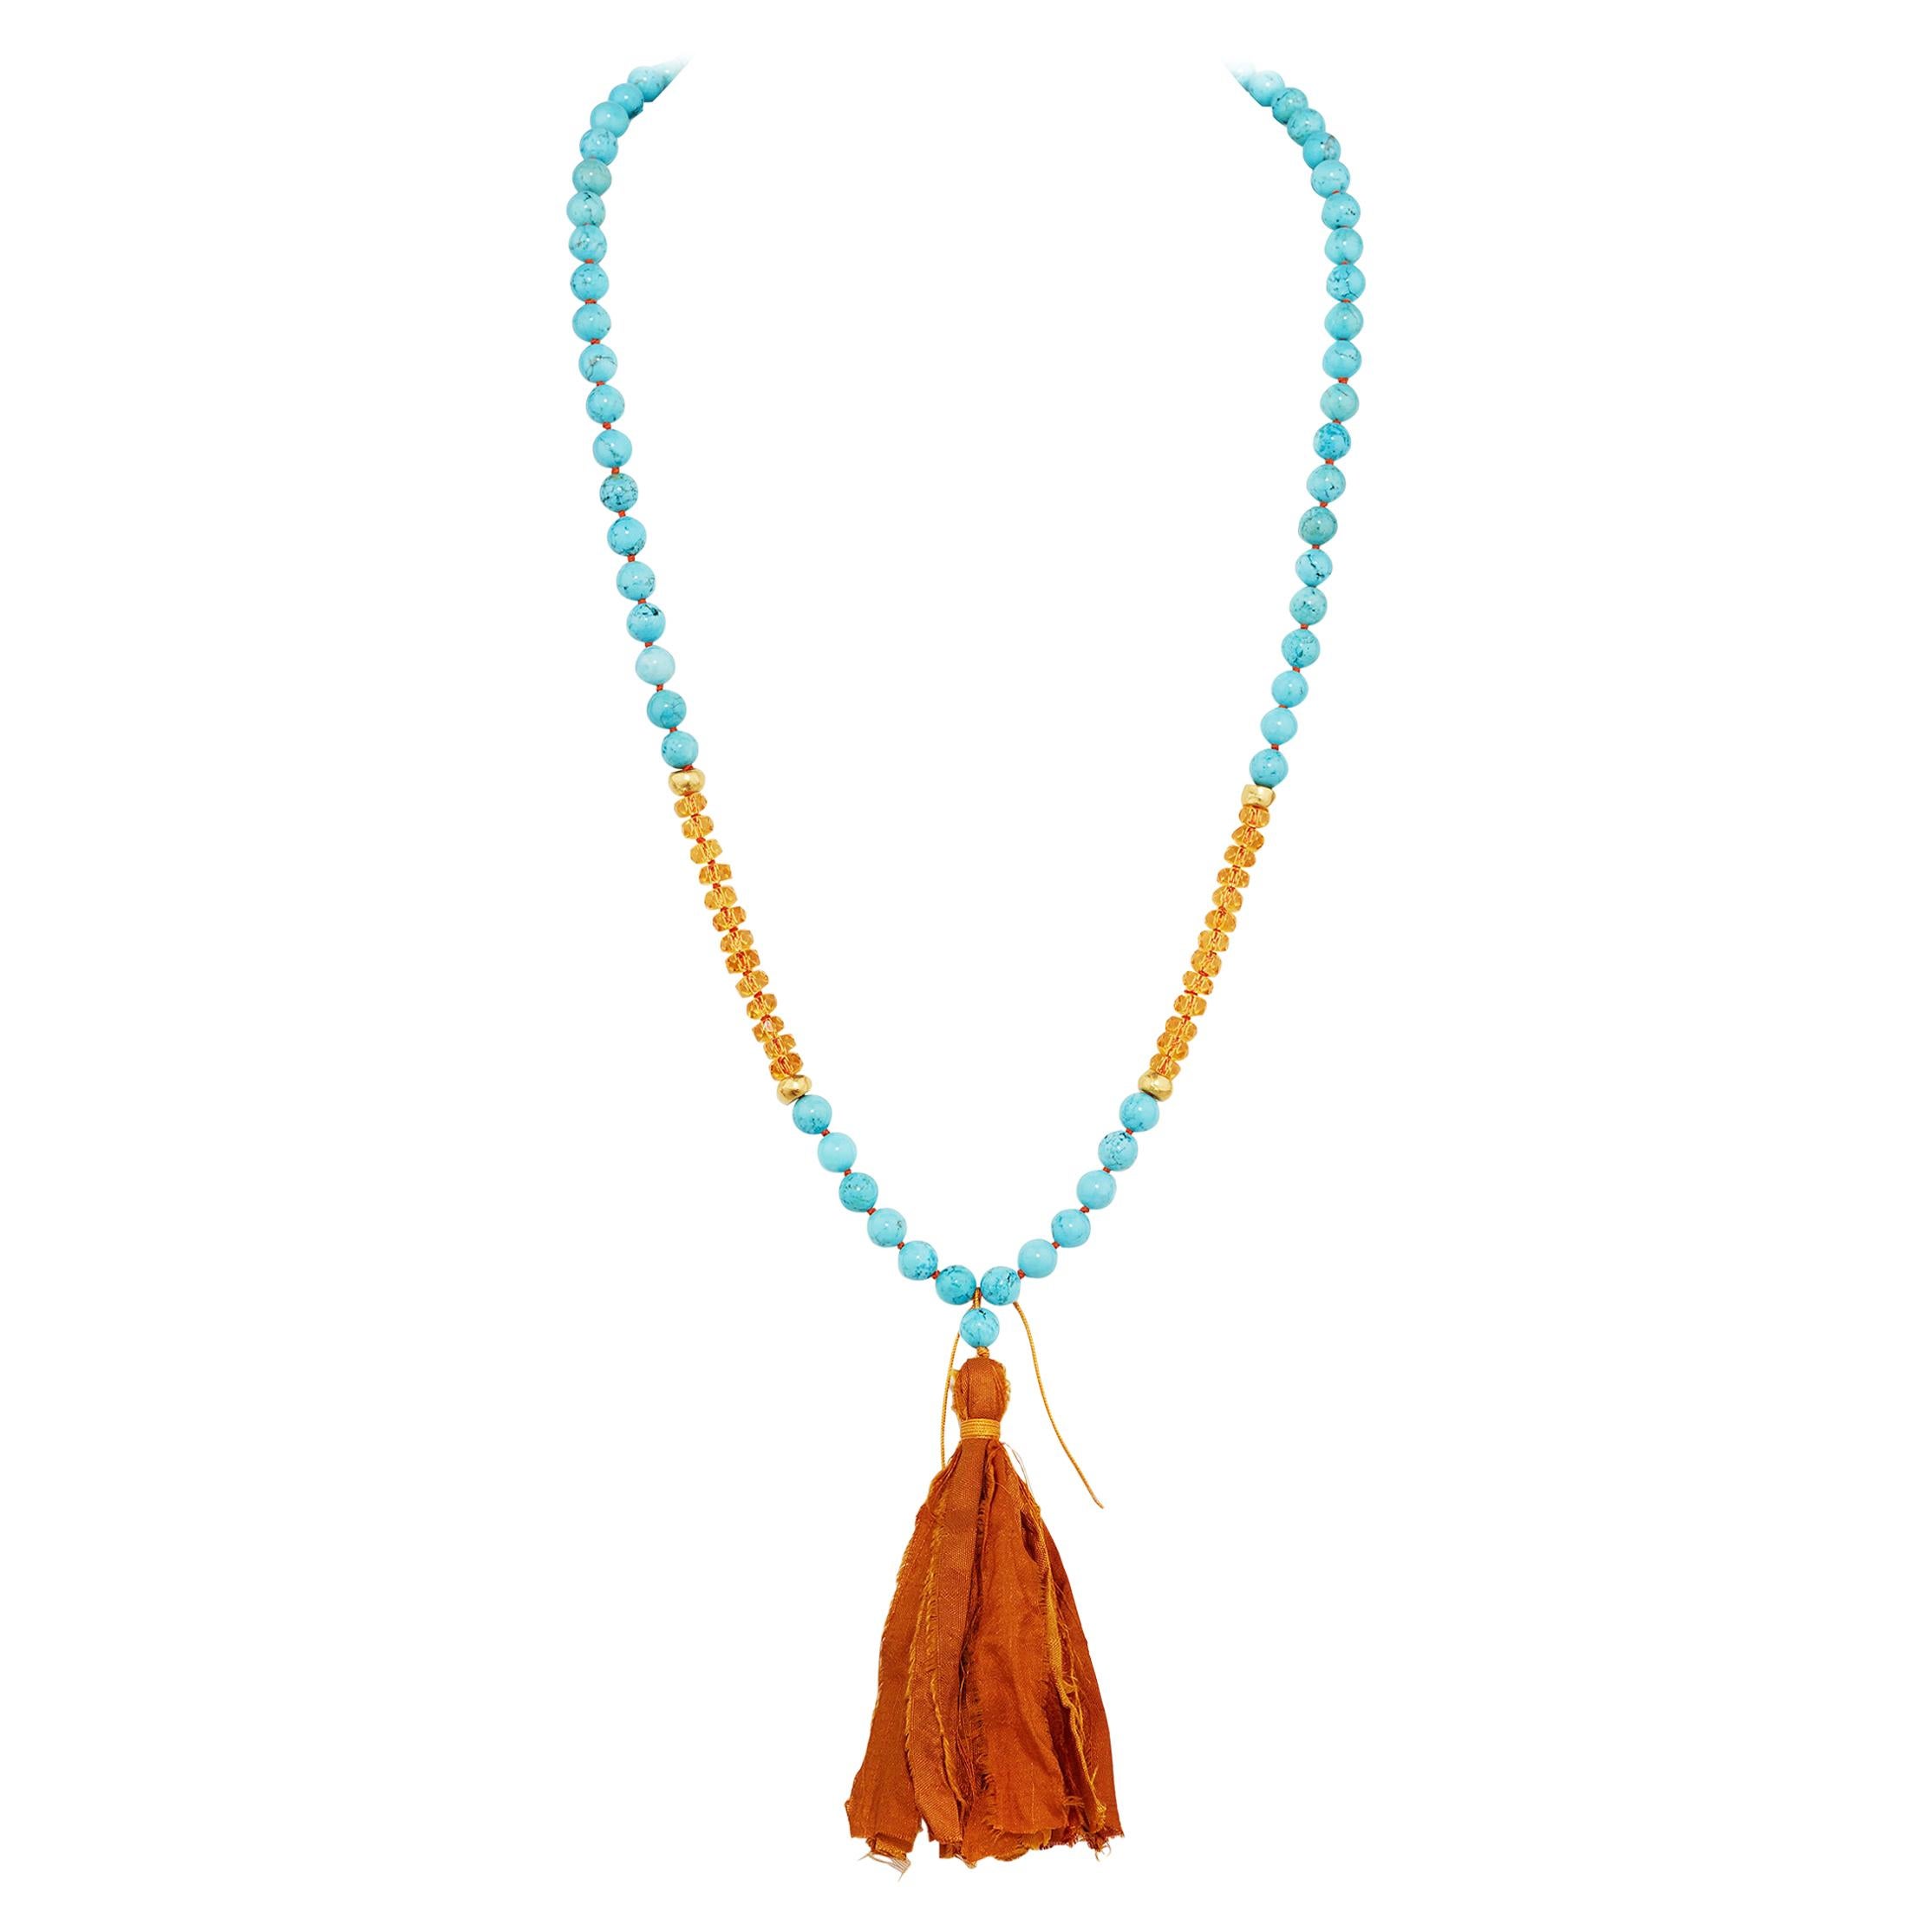 Turquoise Howlite and Citrine Mala / Prayer / Meditation Necklace in 18 Karat YG